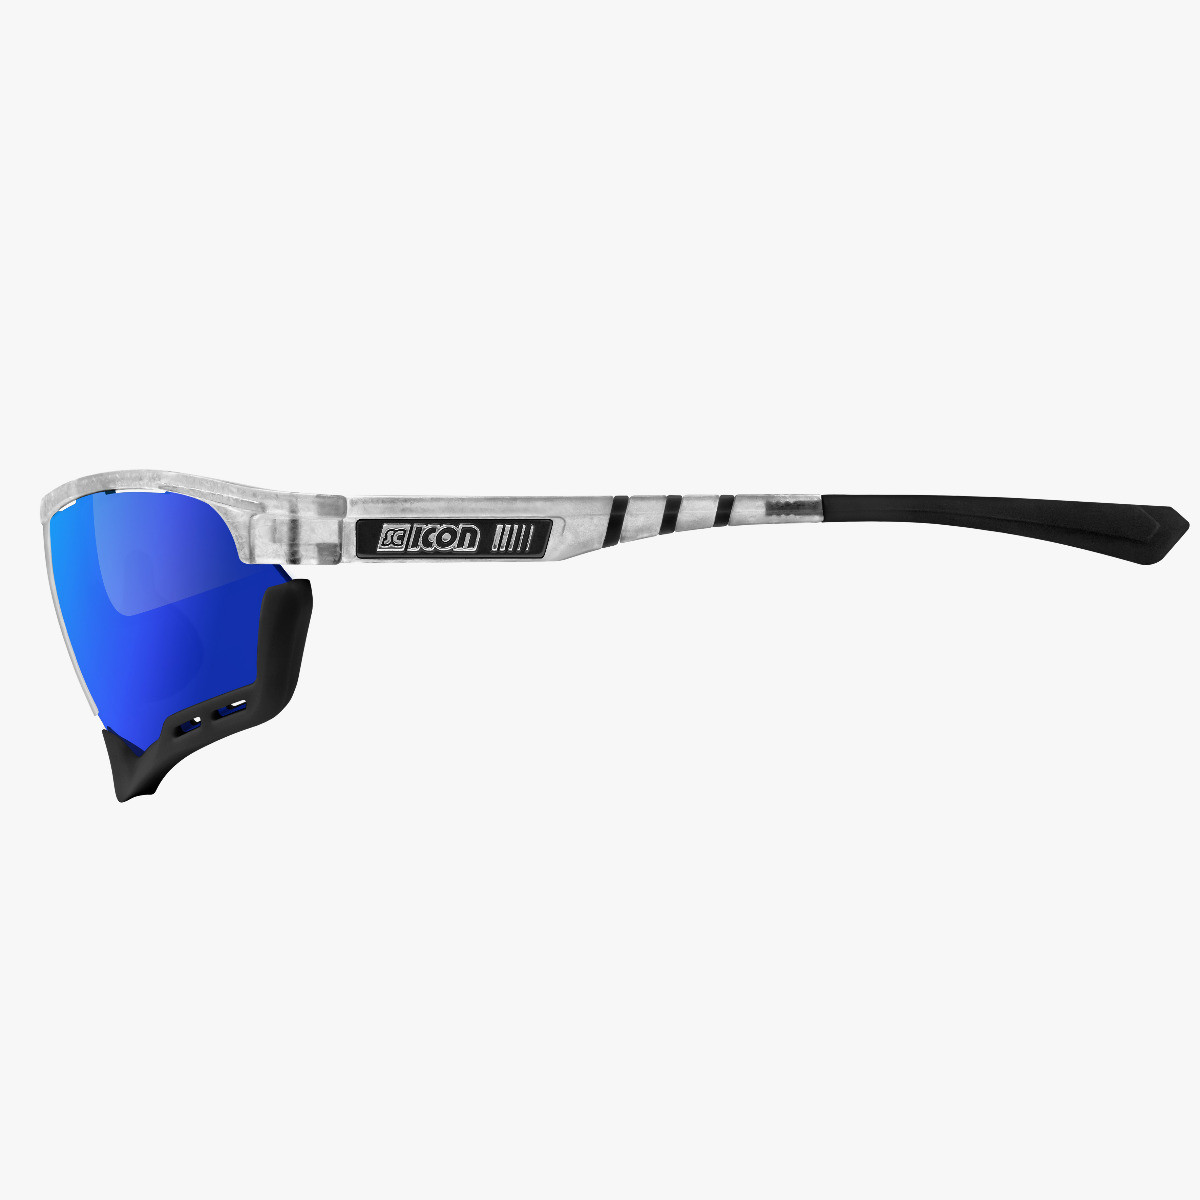 Scicon Sports | Aerocomfort Sport Cycling Performance Sunglasses - Frozen White / Blue - EY15030502
